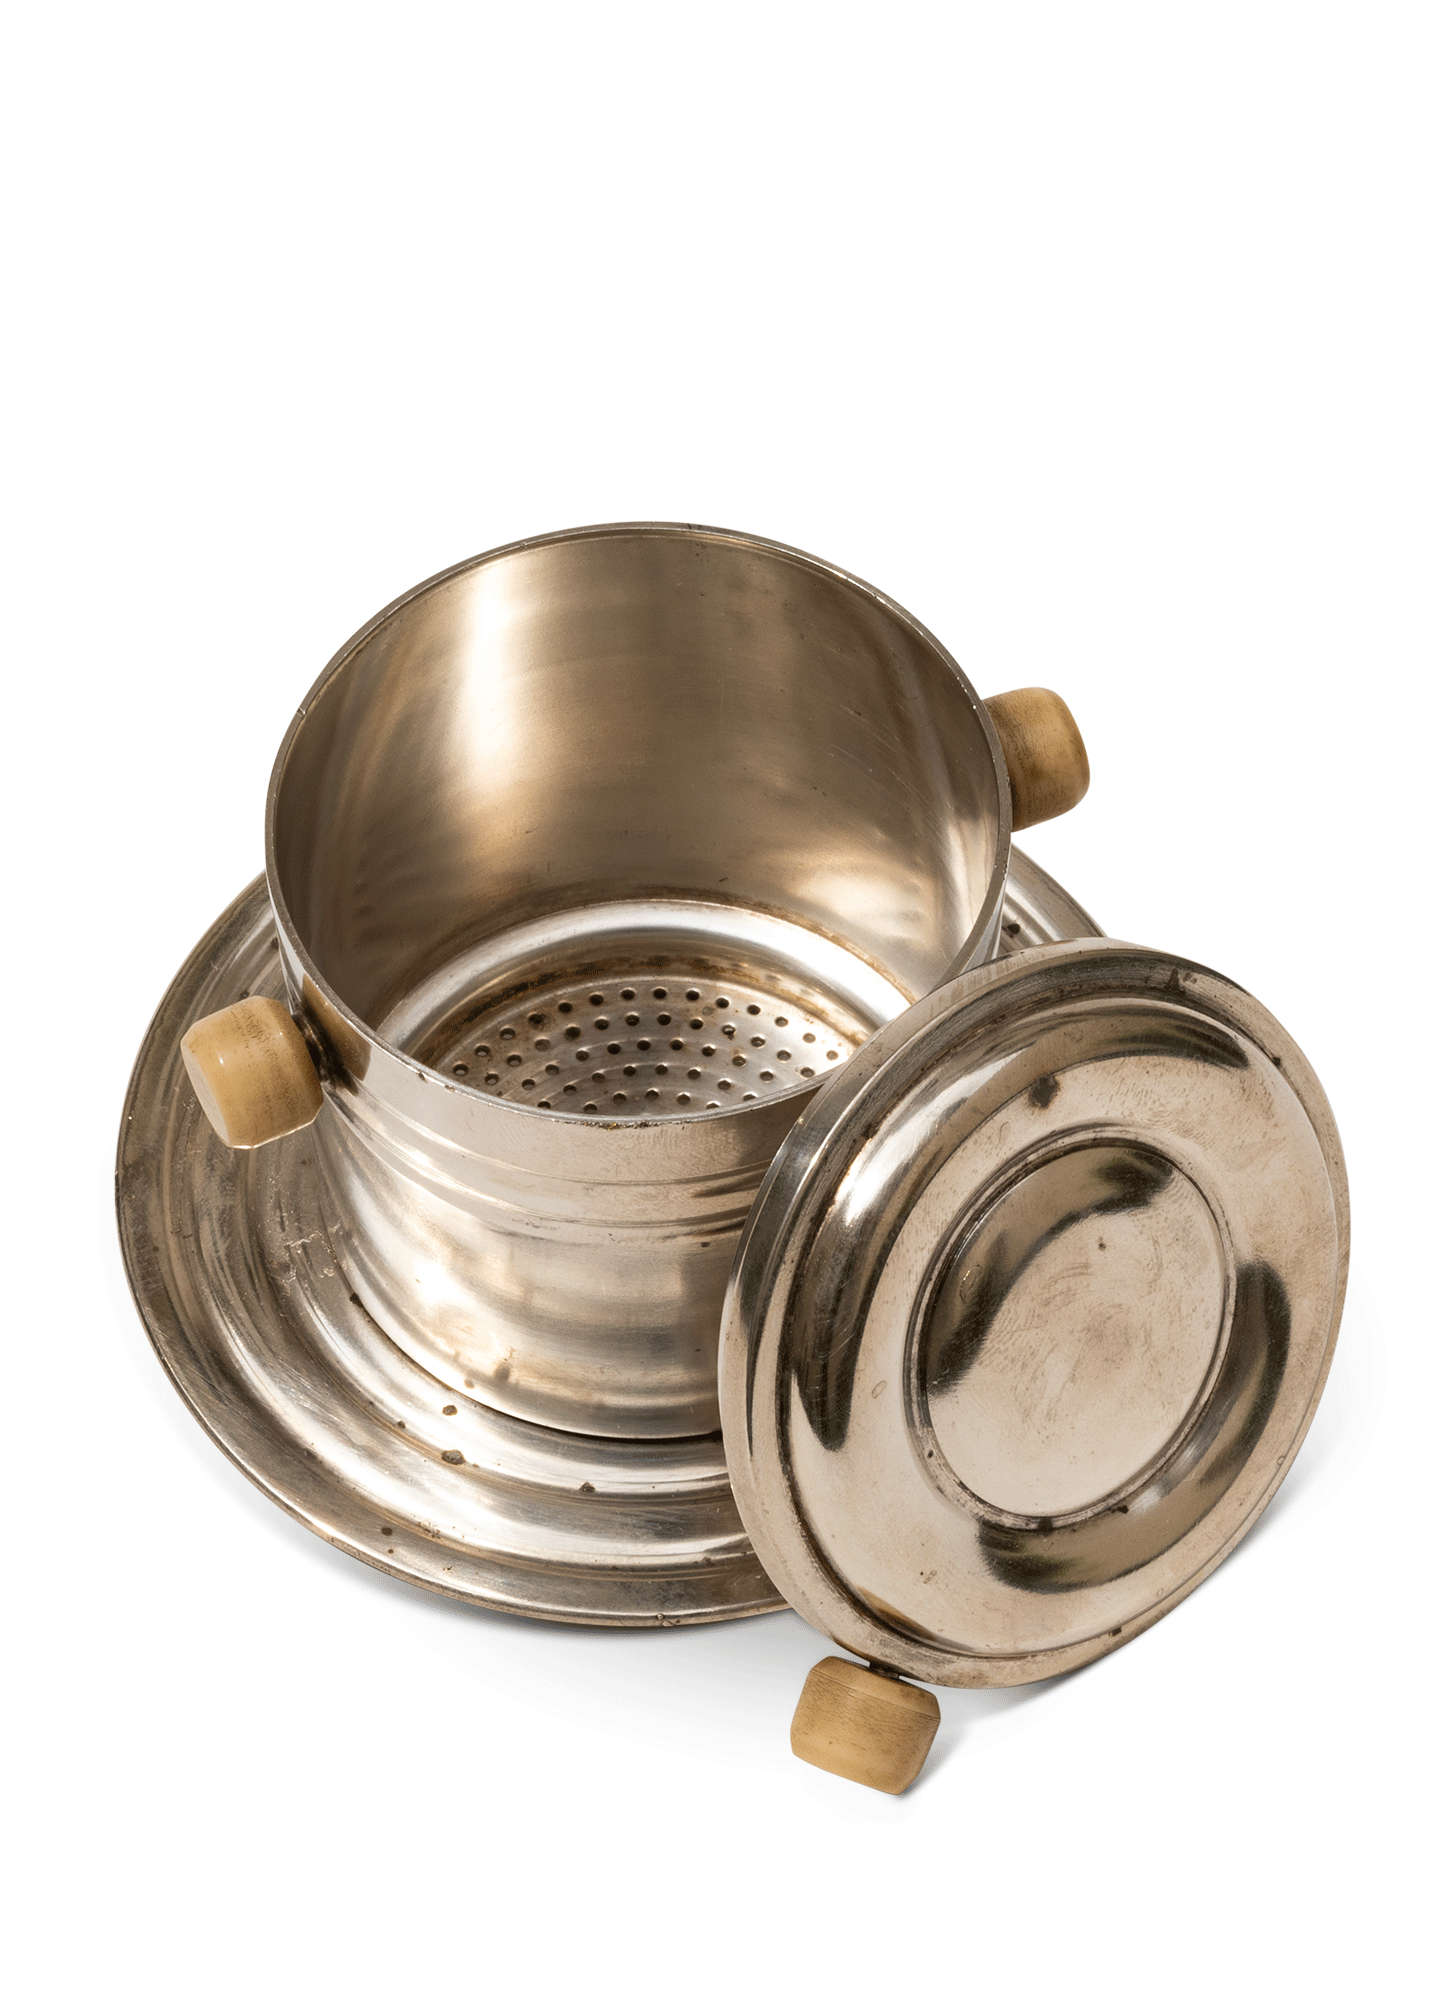 Vintage Silver-Plated Tea Strainer